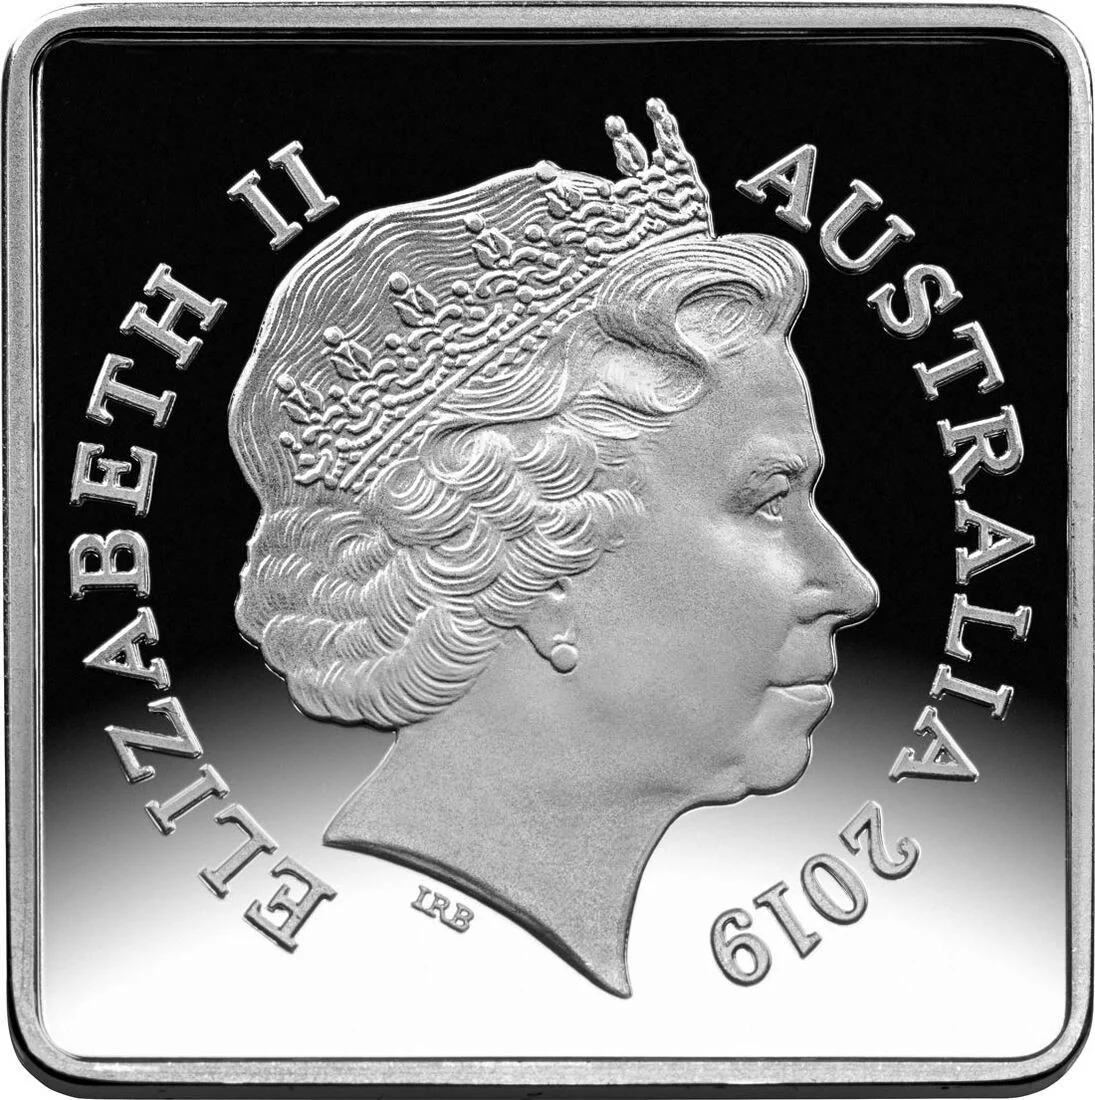 2019 25c Kookaburra Patterns 1919-1921 Fine Silver Proof Coin Set - Reverse View